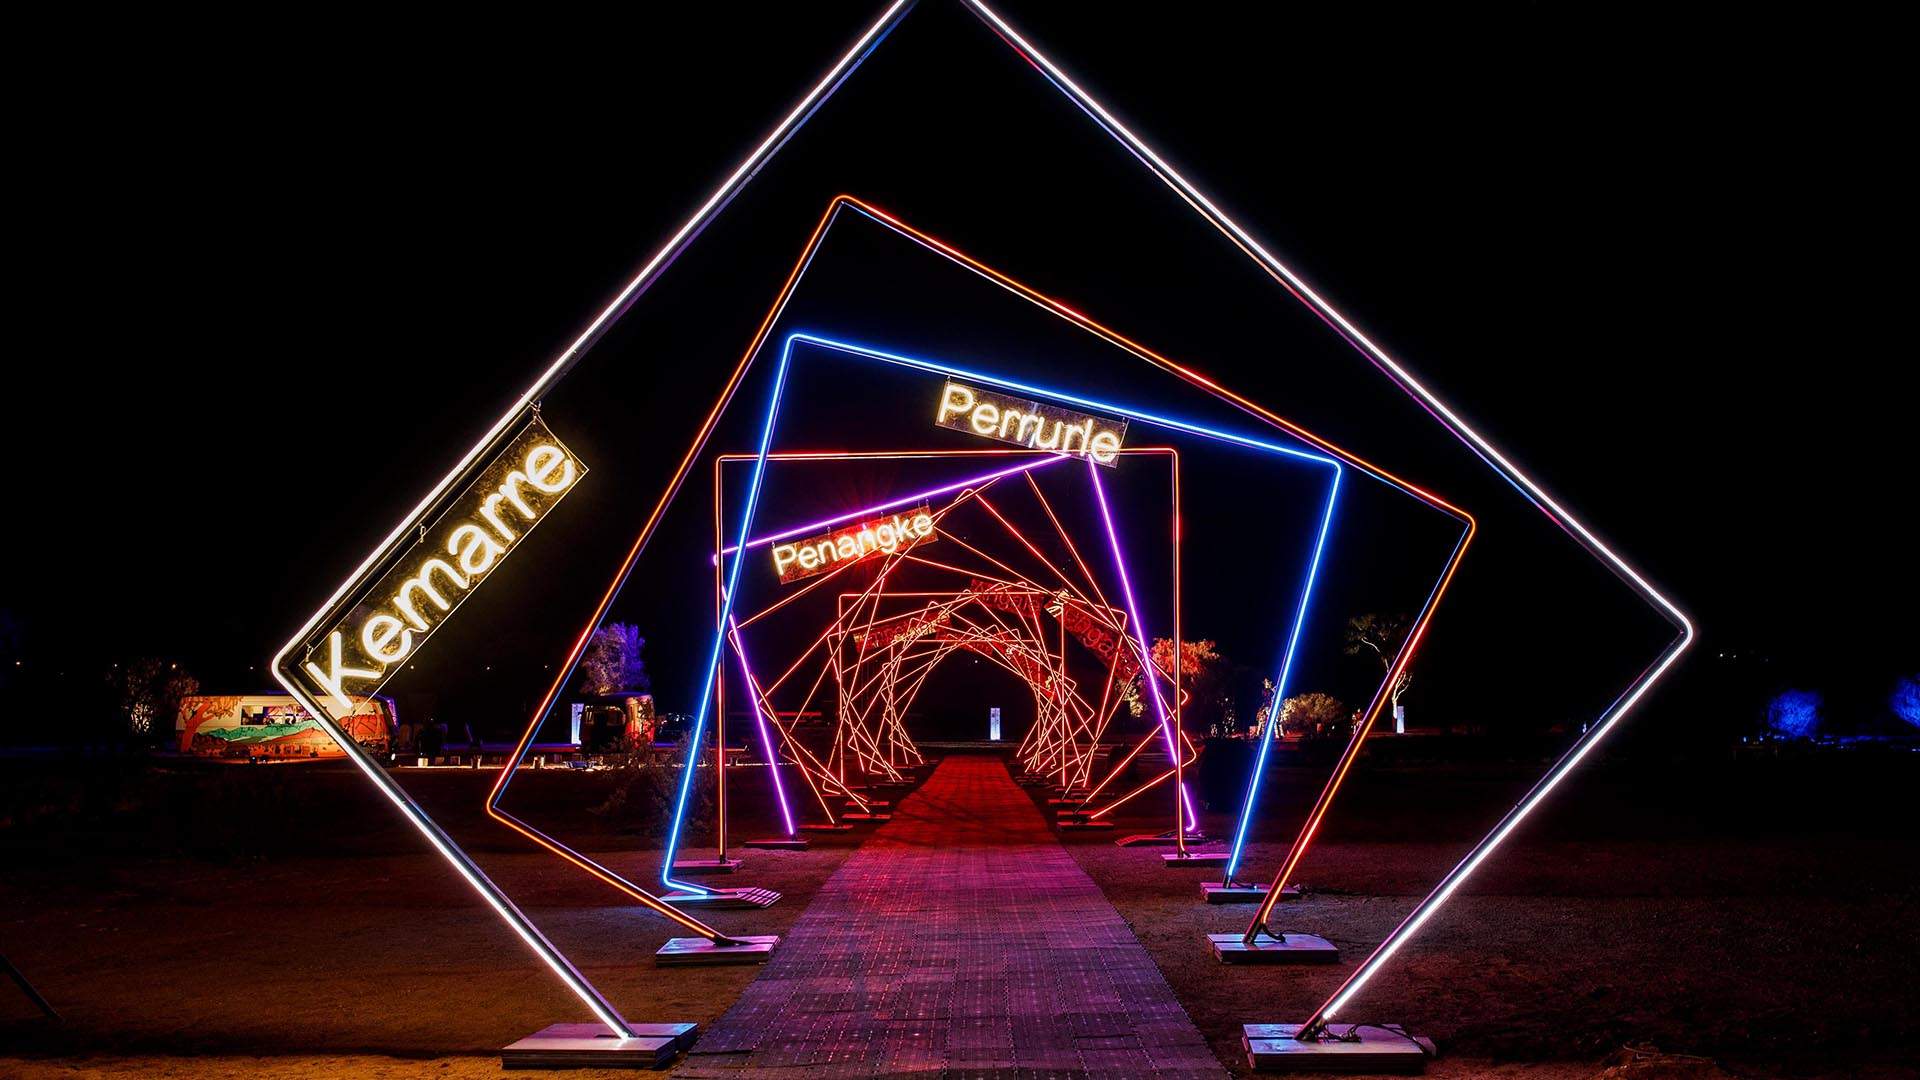 Alice Springs' Dazzling Parrtjima Festival Will Light Up the Red Centre in September